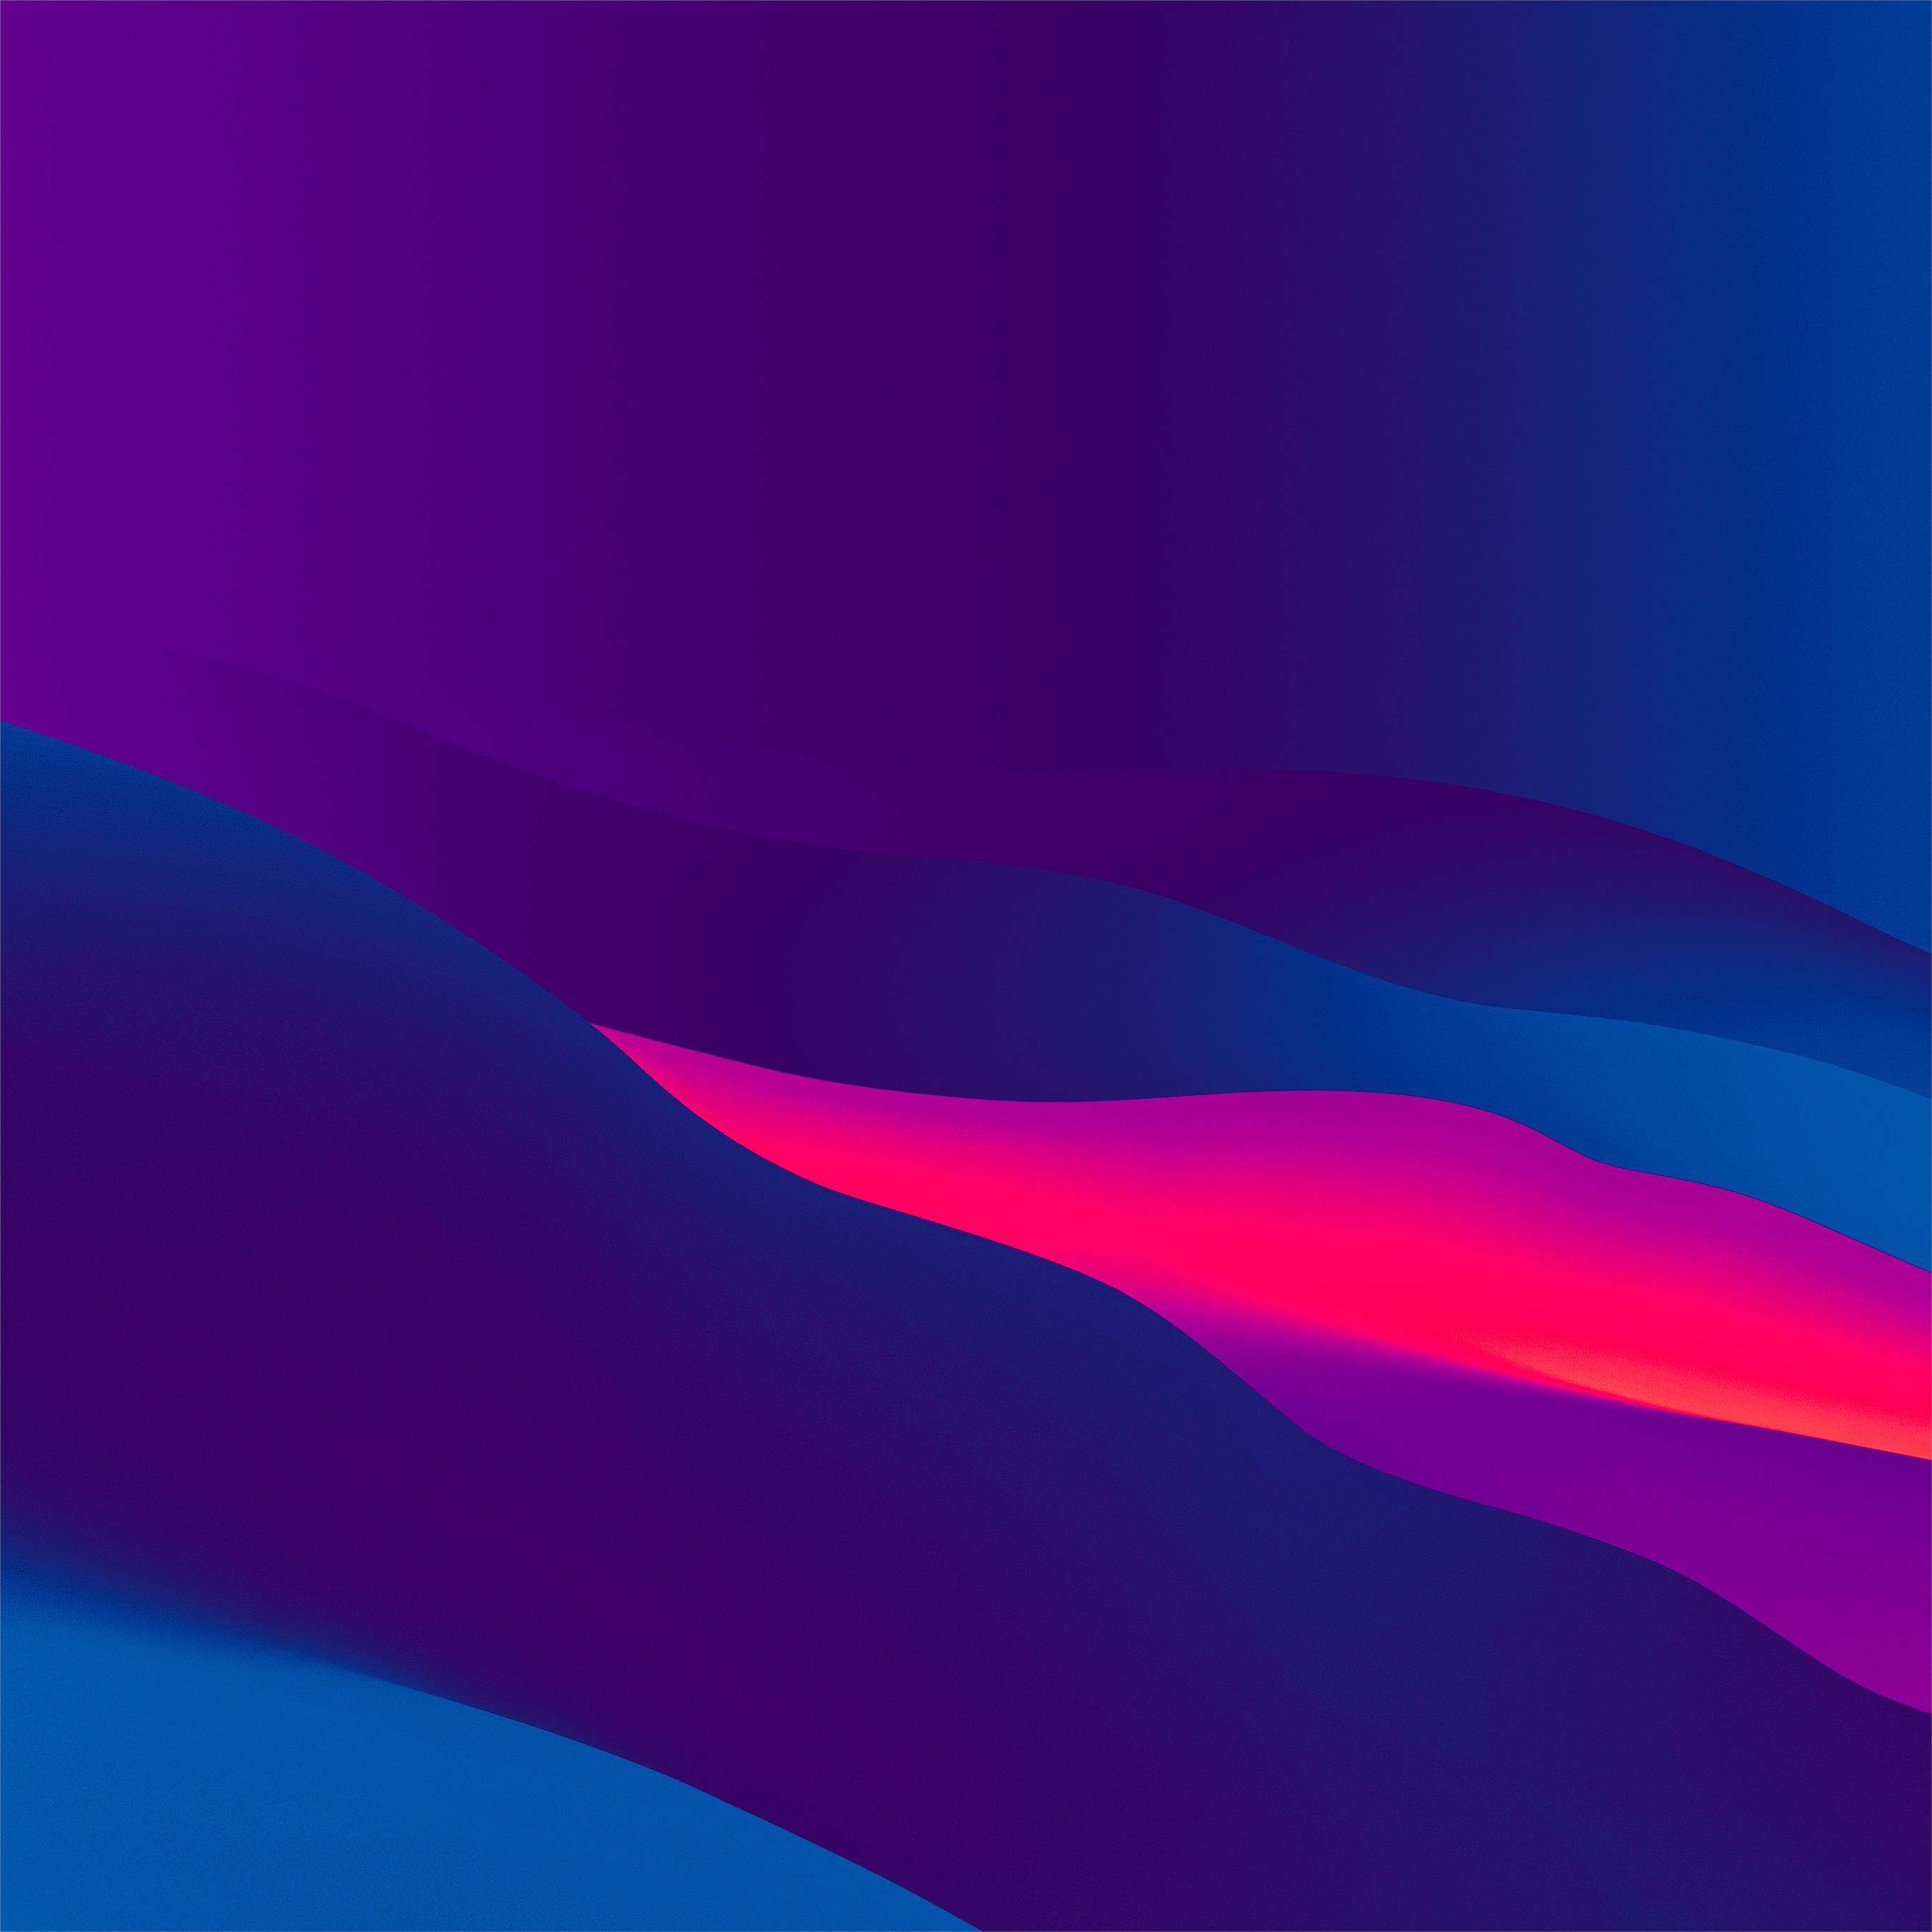 blue lint abstract 8k iPad Pro Wallpaper Free Download